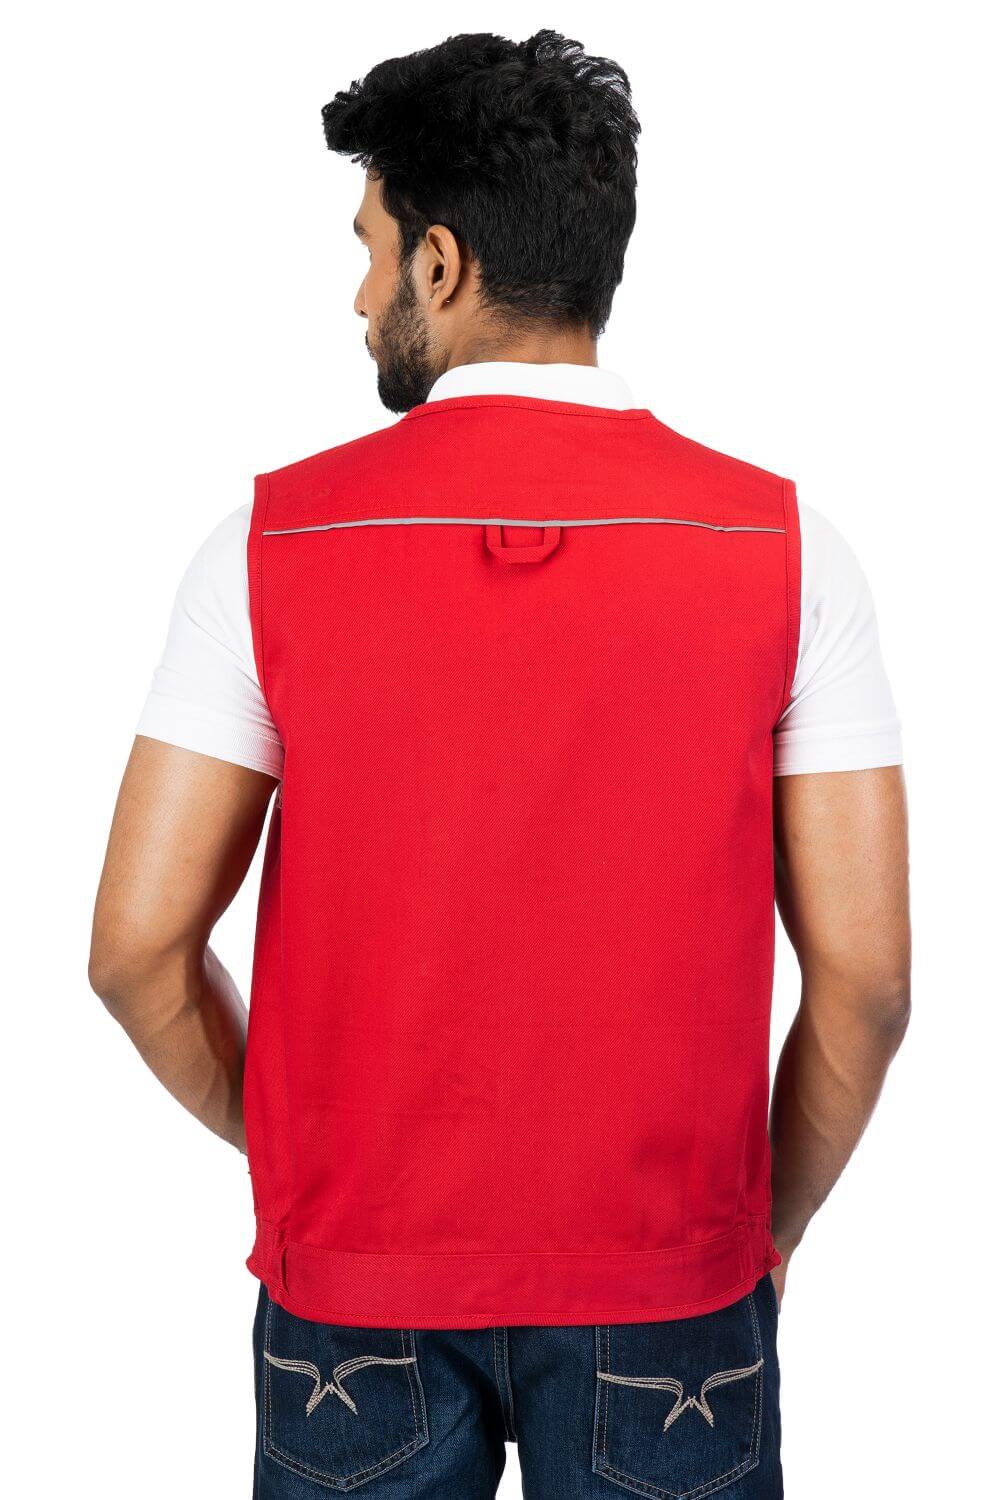 Stylised mid-torso bone pockets with concealed zips. An ergonomically designed multi-utility safari Red vest.